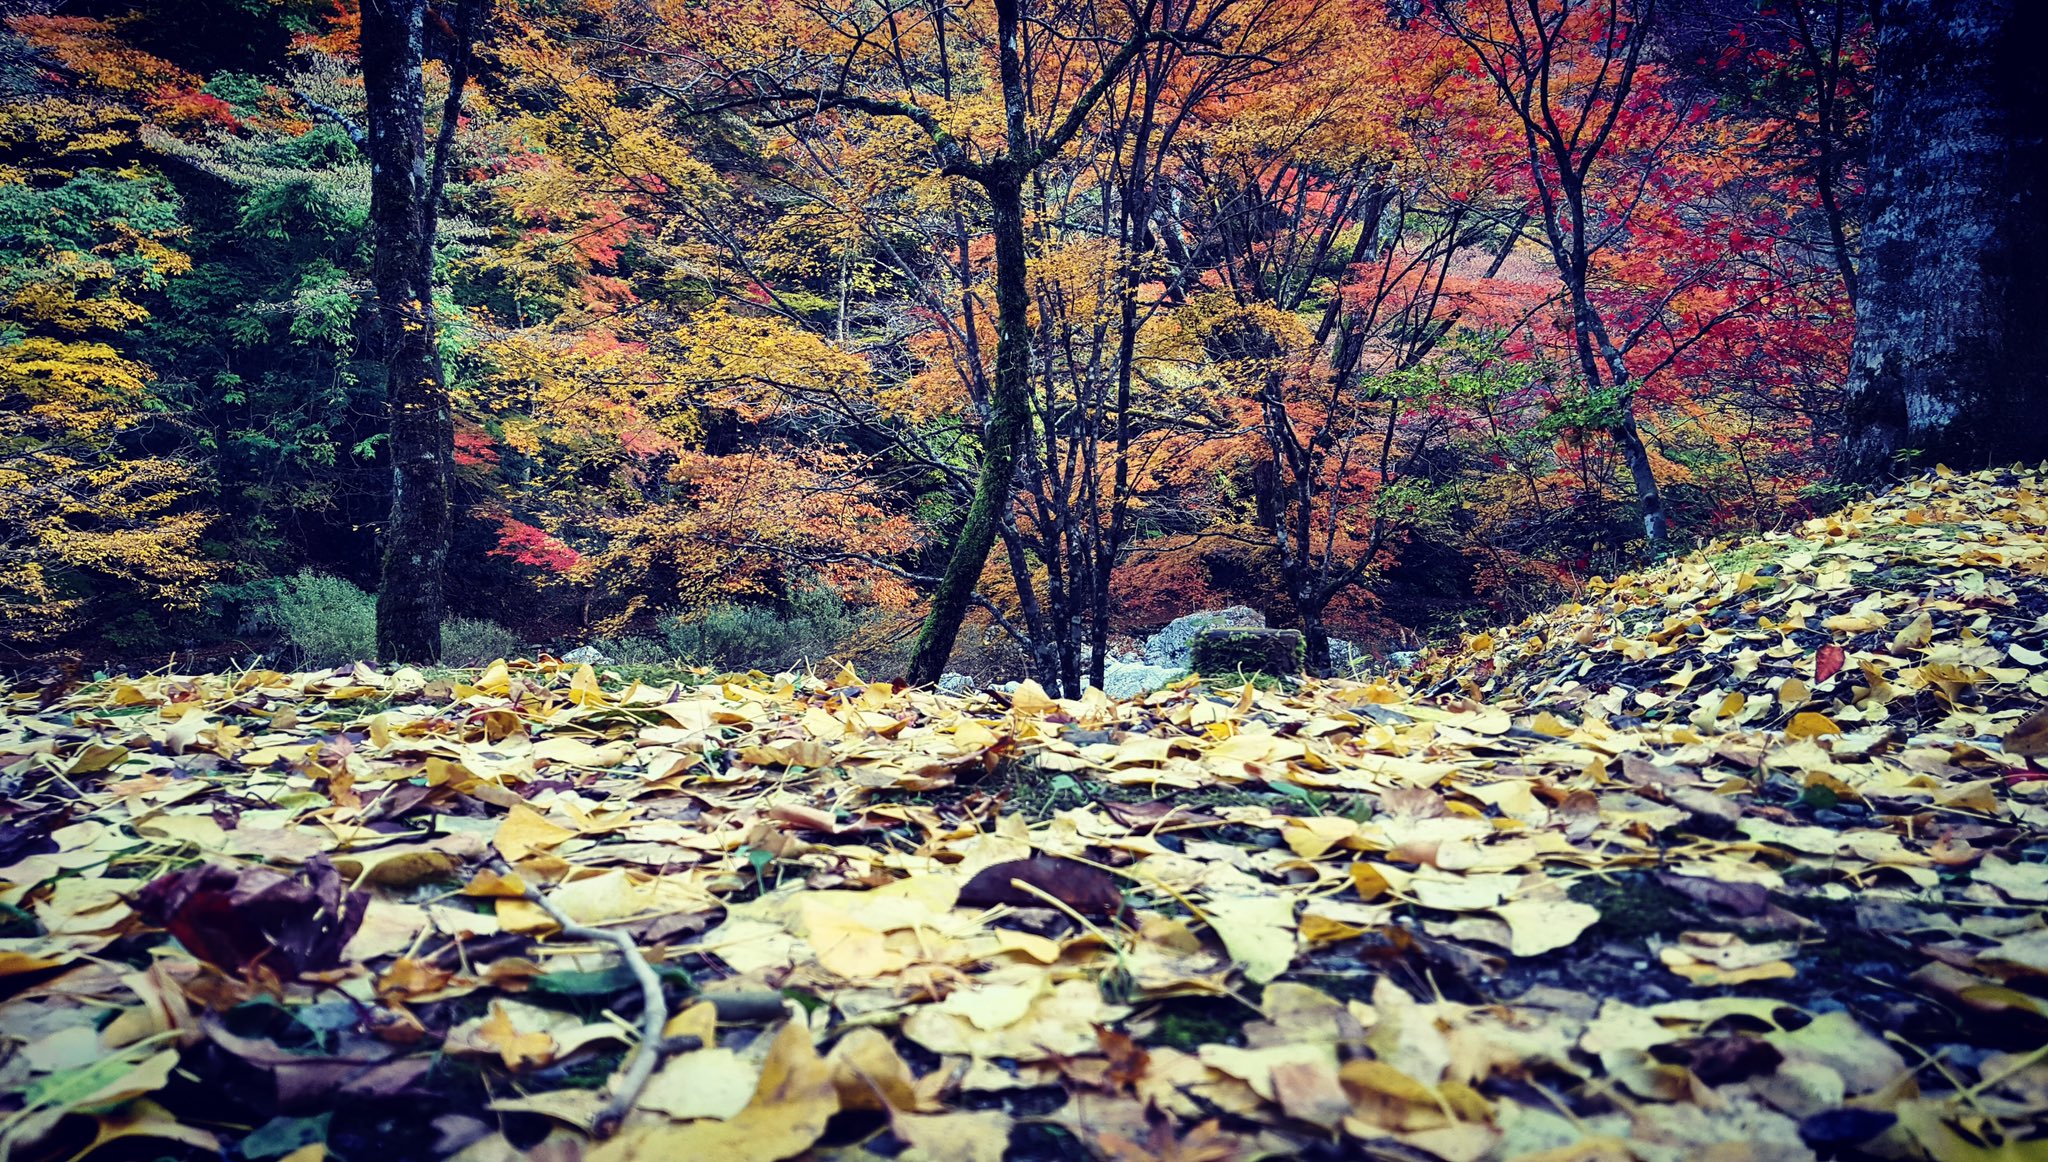 3d Excel Art Doubutsuno Mori 綺麗な秋景色を作れるように頑張ります あつ森 あつまれどうぶつの森 Acnh T Co 9ptcg7hsuv Twitter